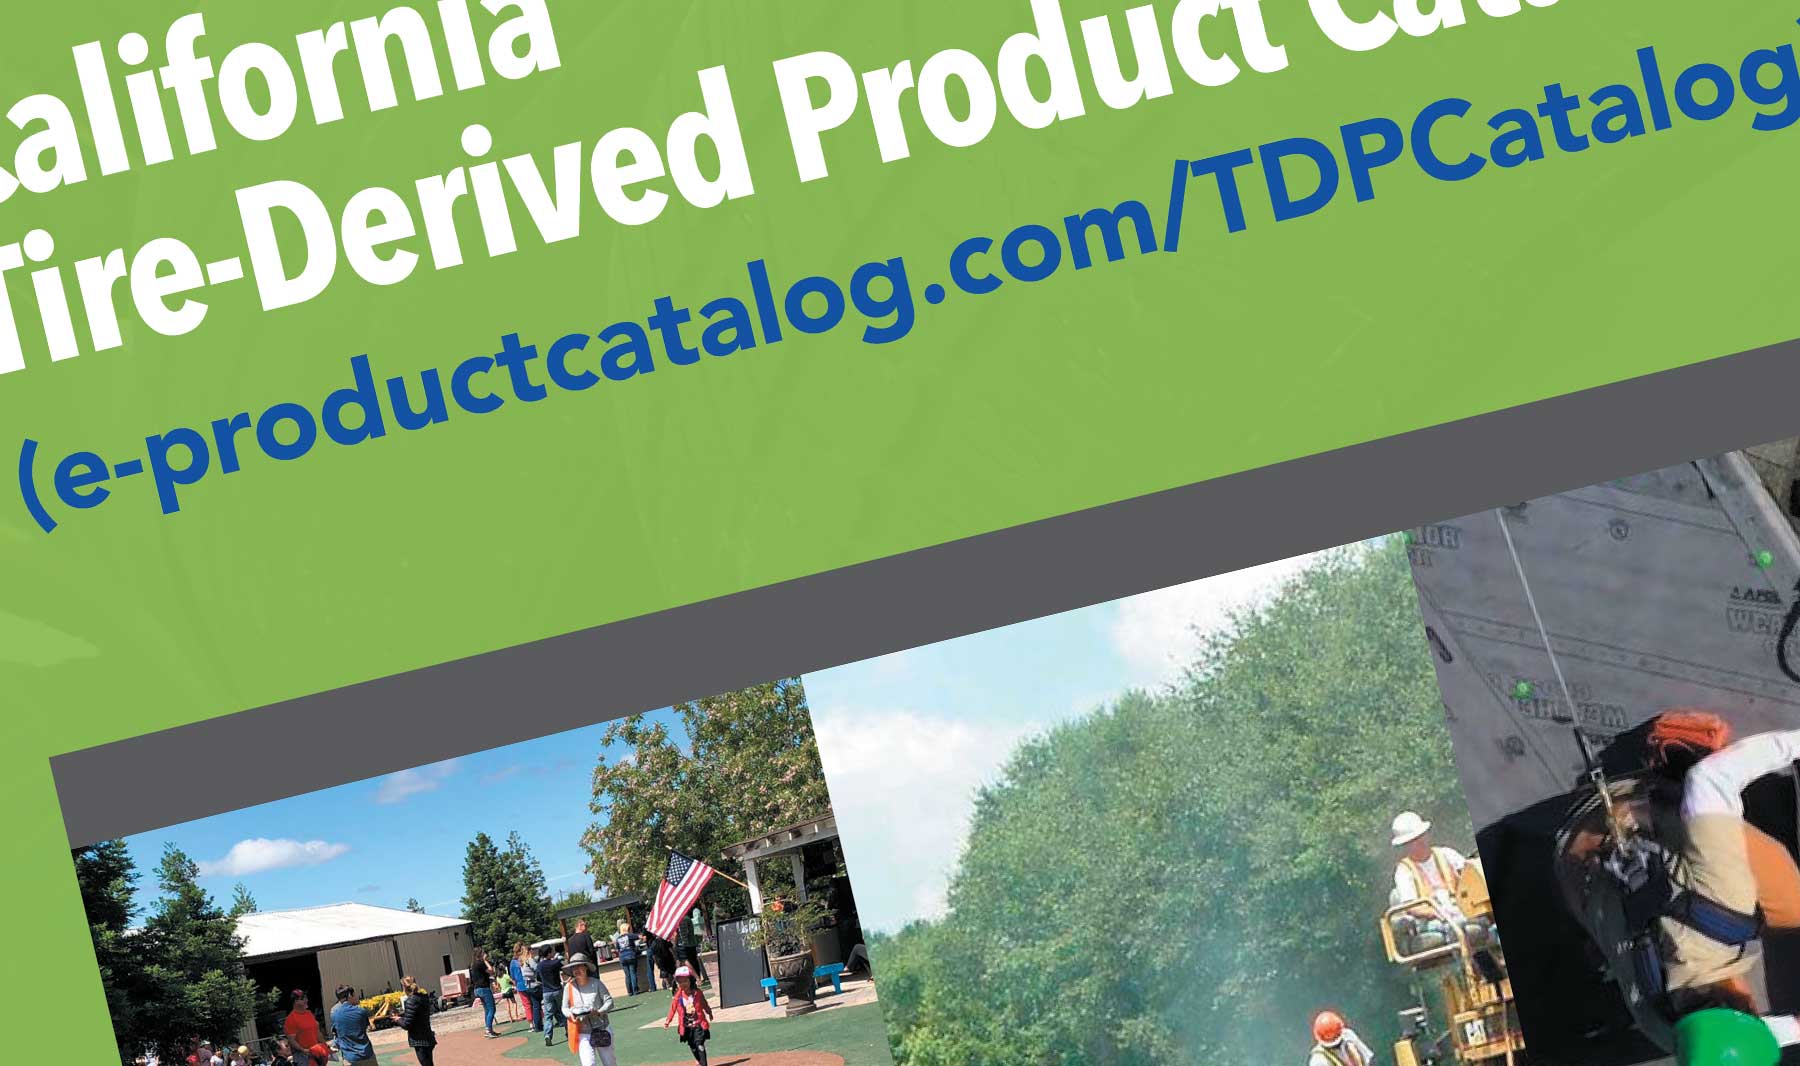 California Tire-Derived Product Catalog for California